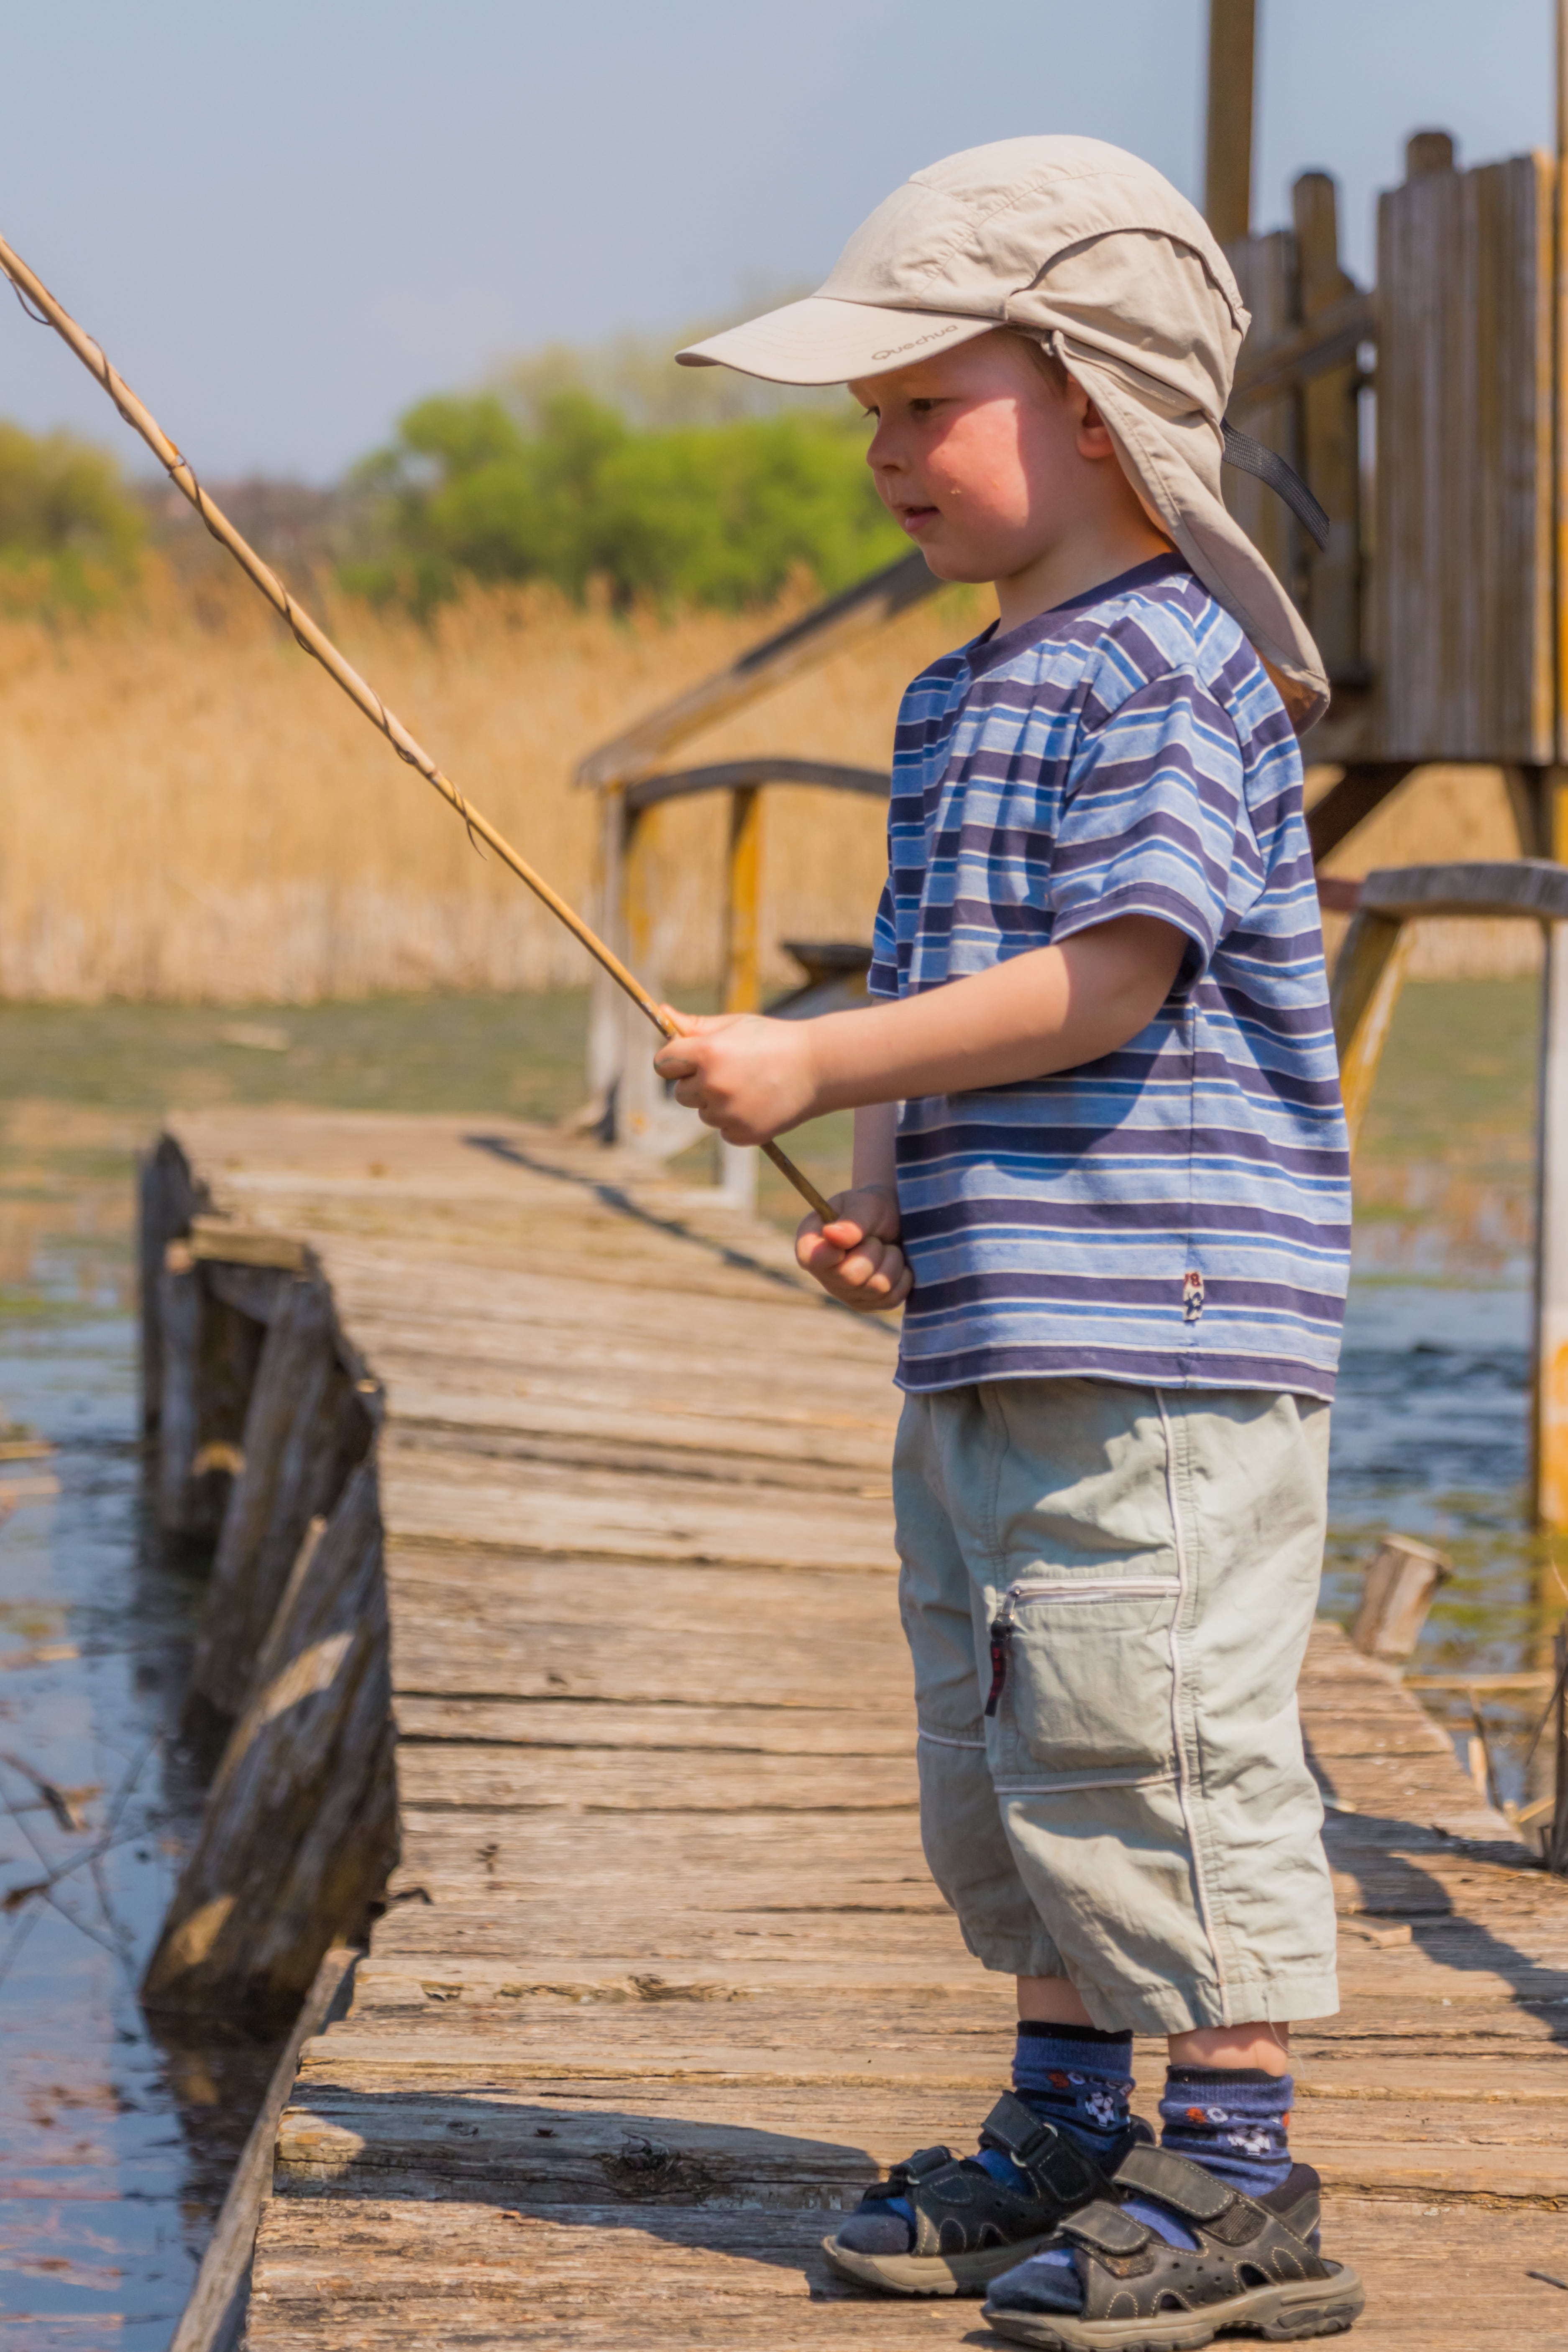 Cute Boy Going Fishing On Summer Stock Photo 769434694